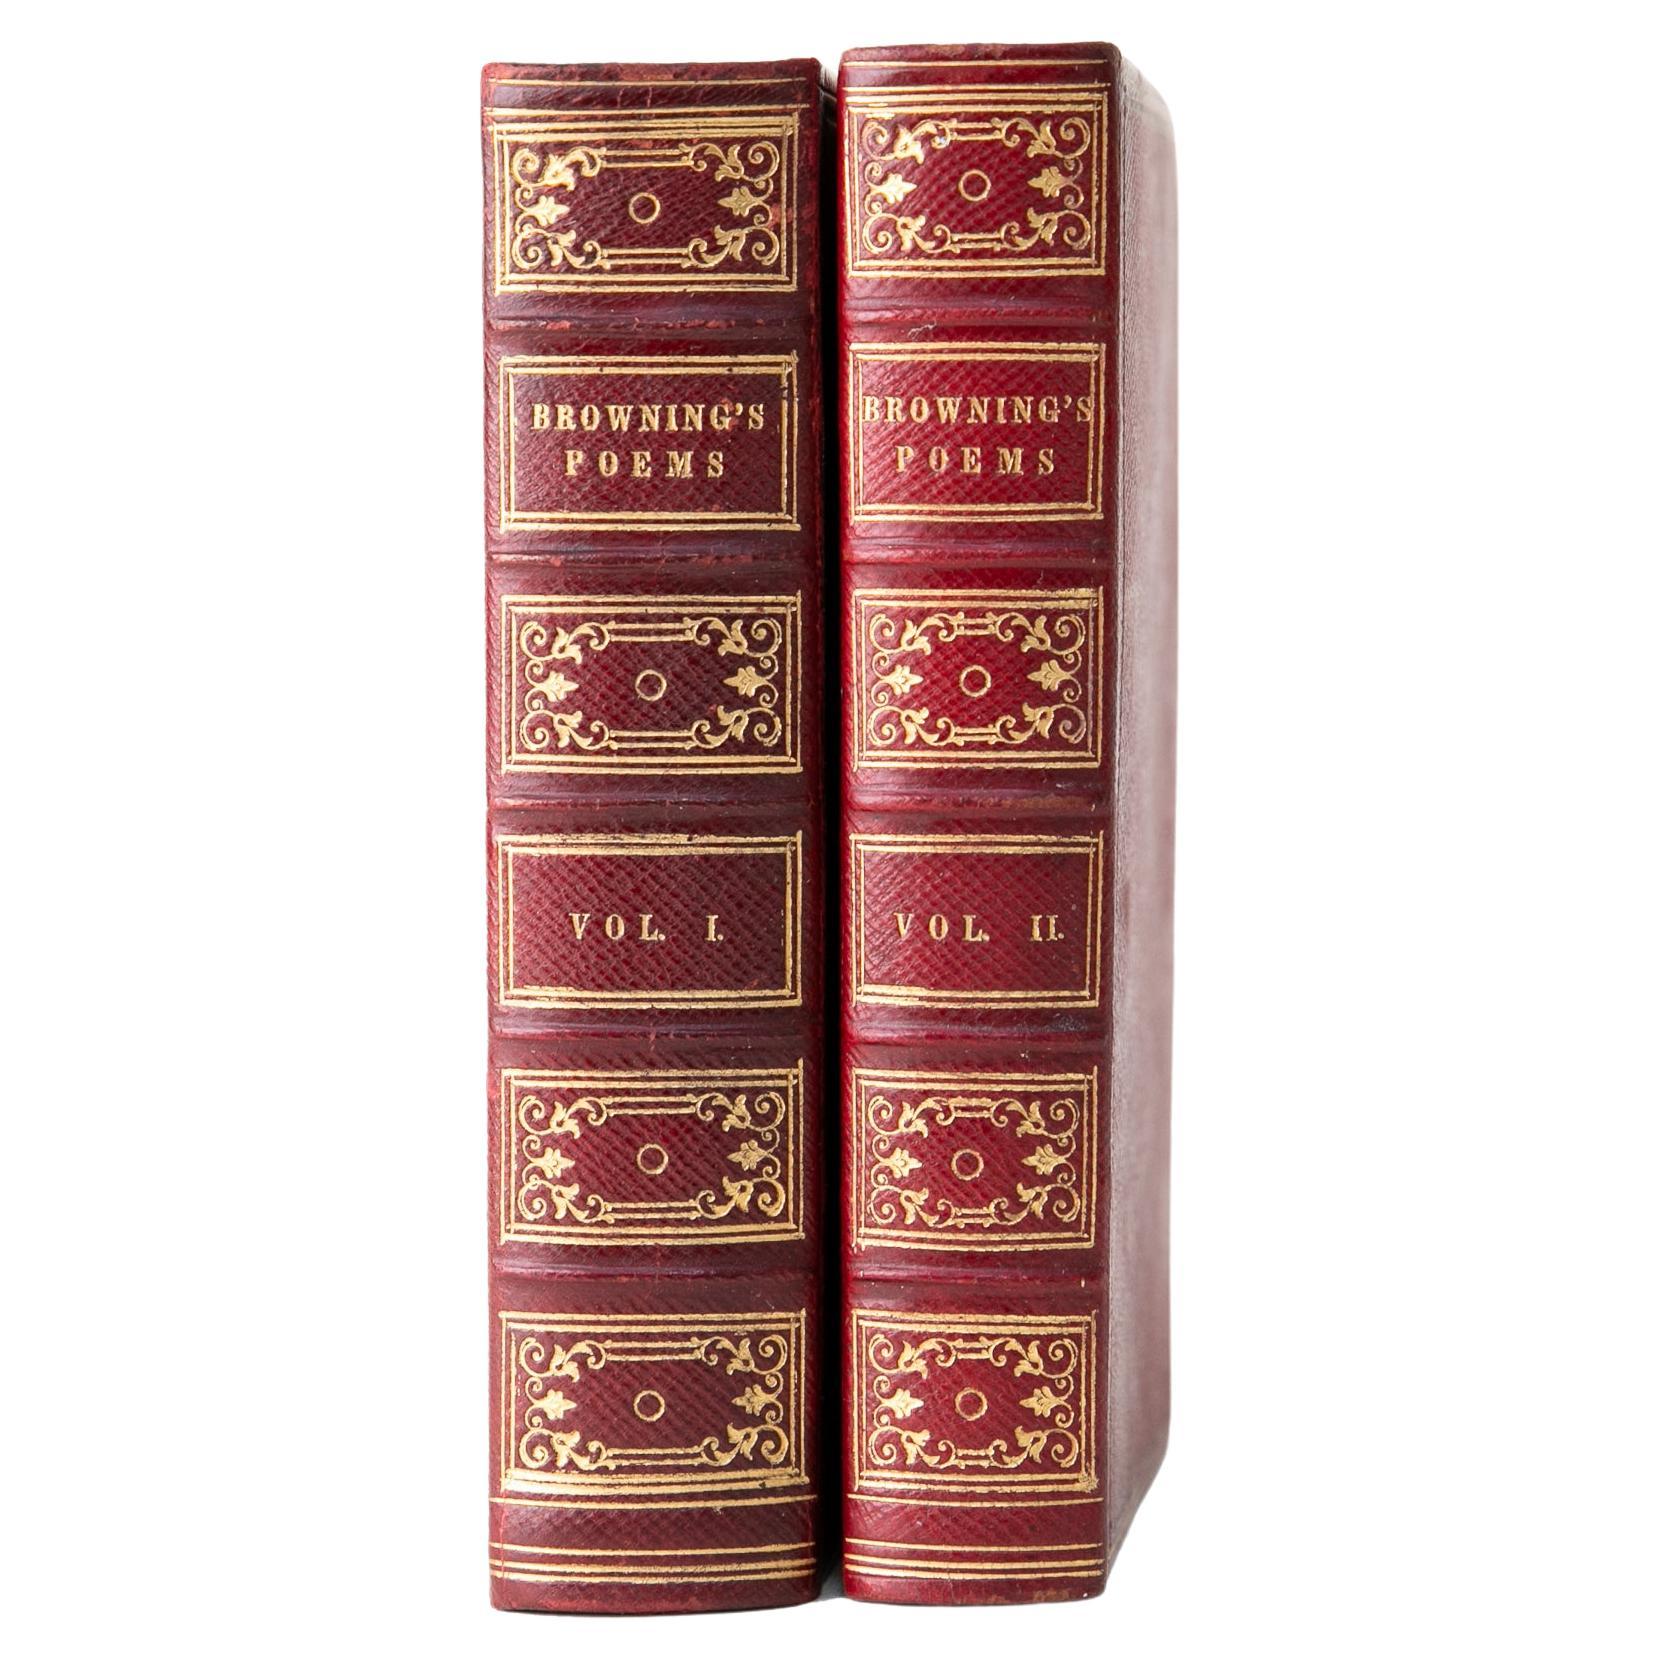 2 Volumes. Elizabeth Barrett Browning, The Poems. For Sale